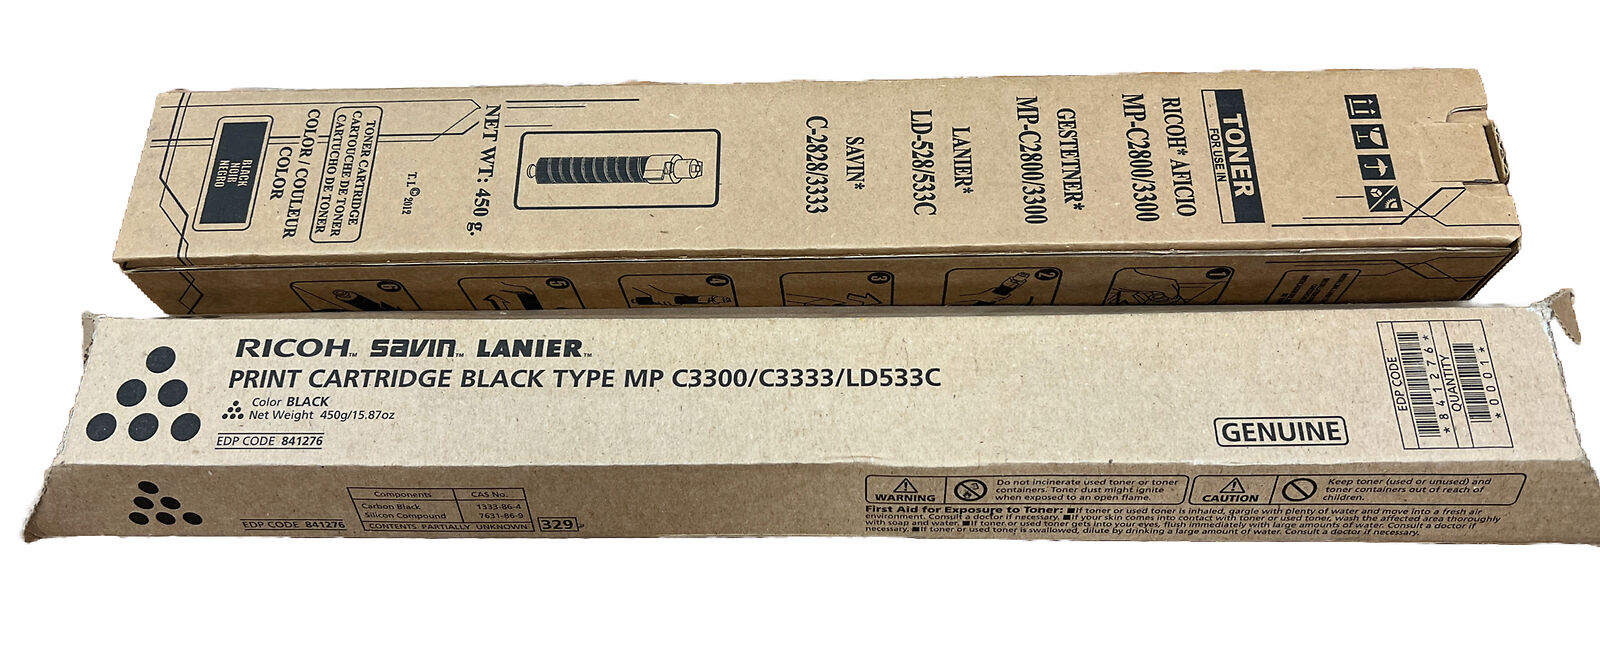 841276 GENUINE & Compatible Ricoh Savin Lanier MP C3300/C3333/LD533C BLACK Toner